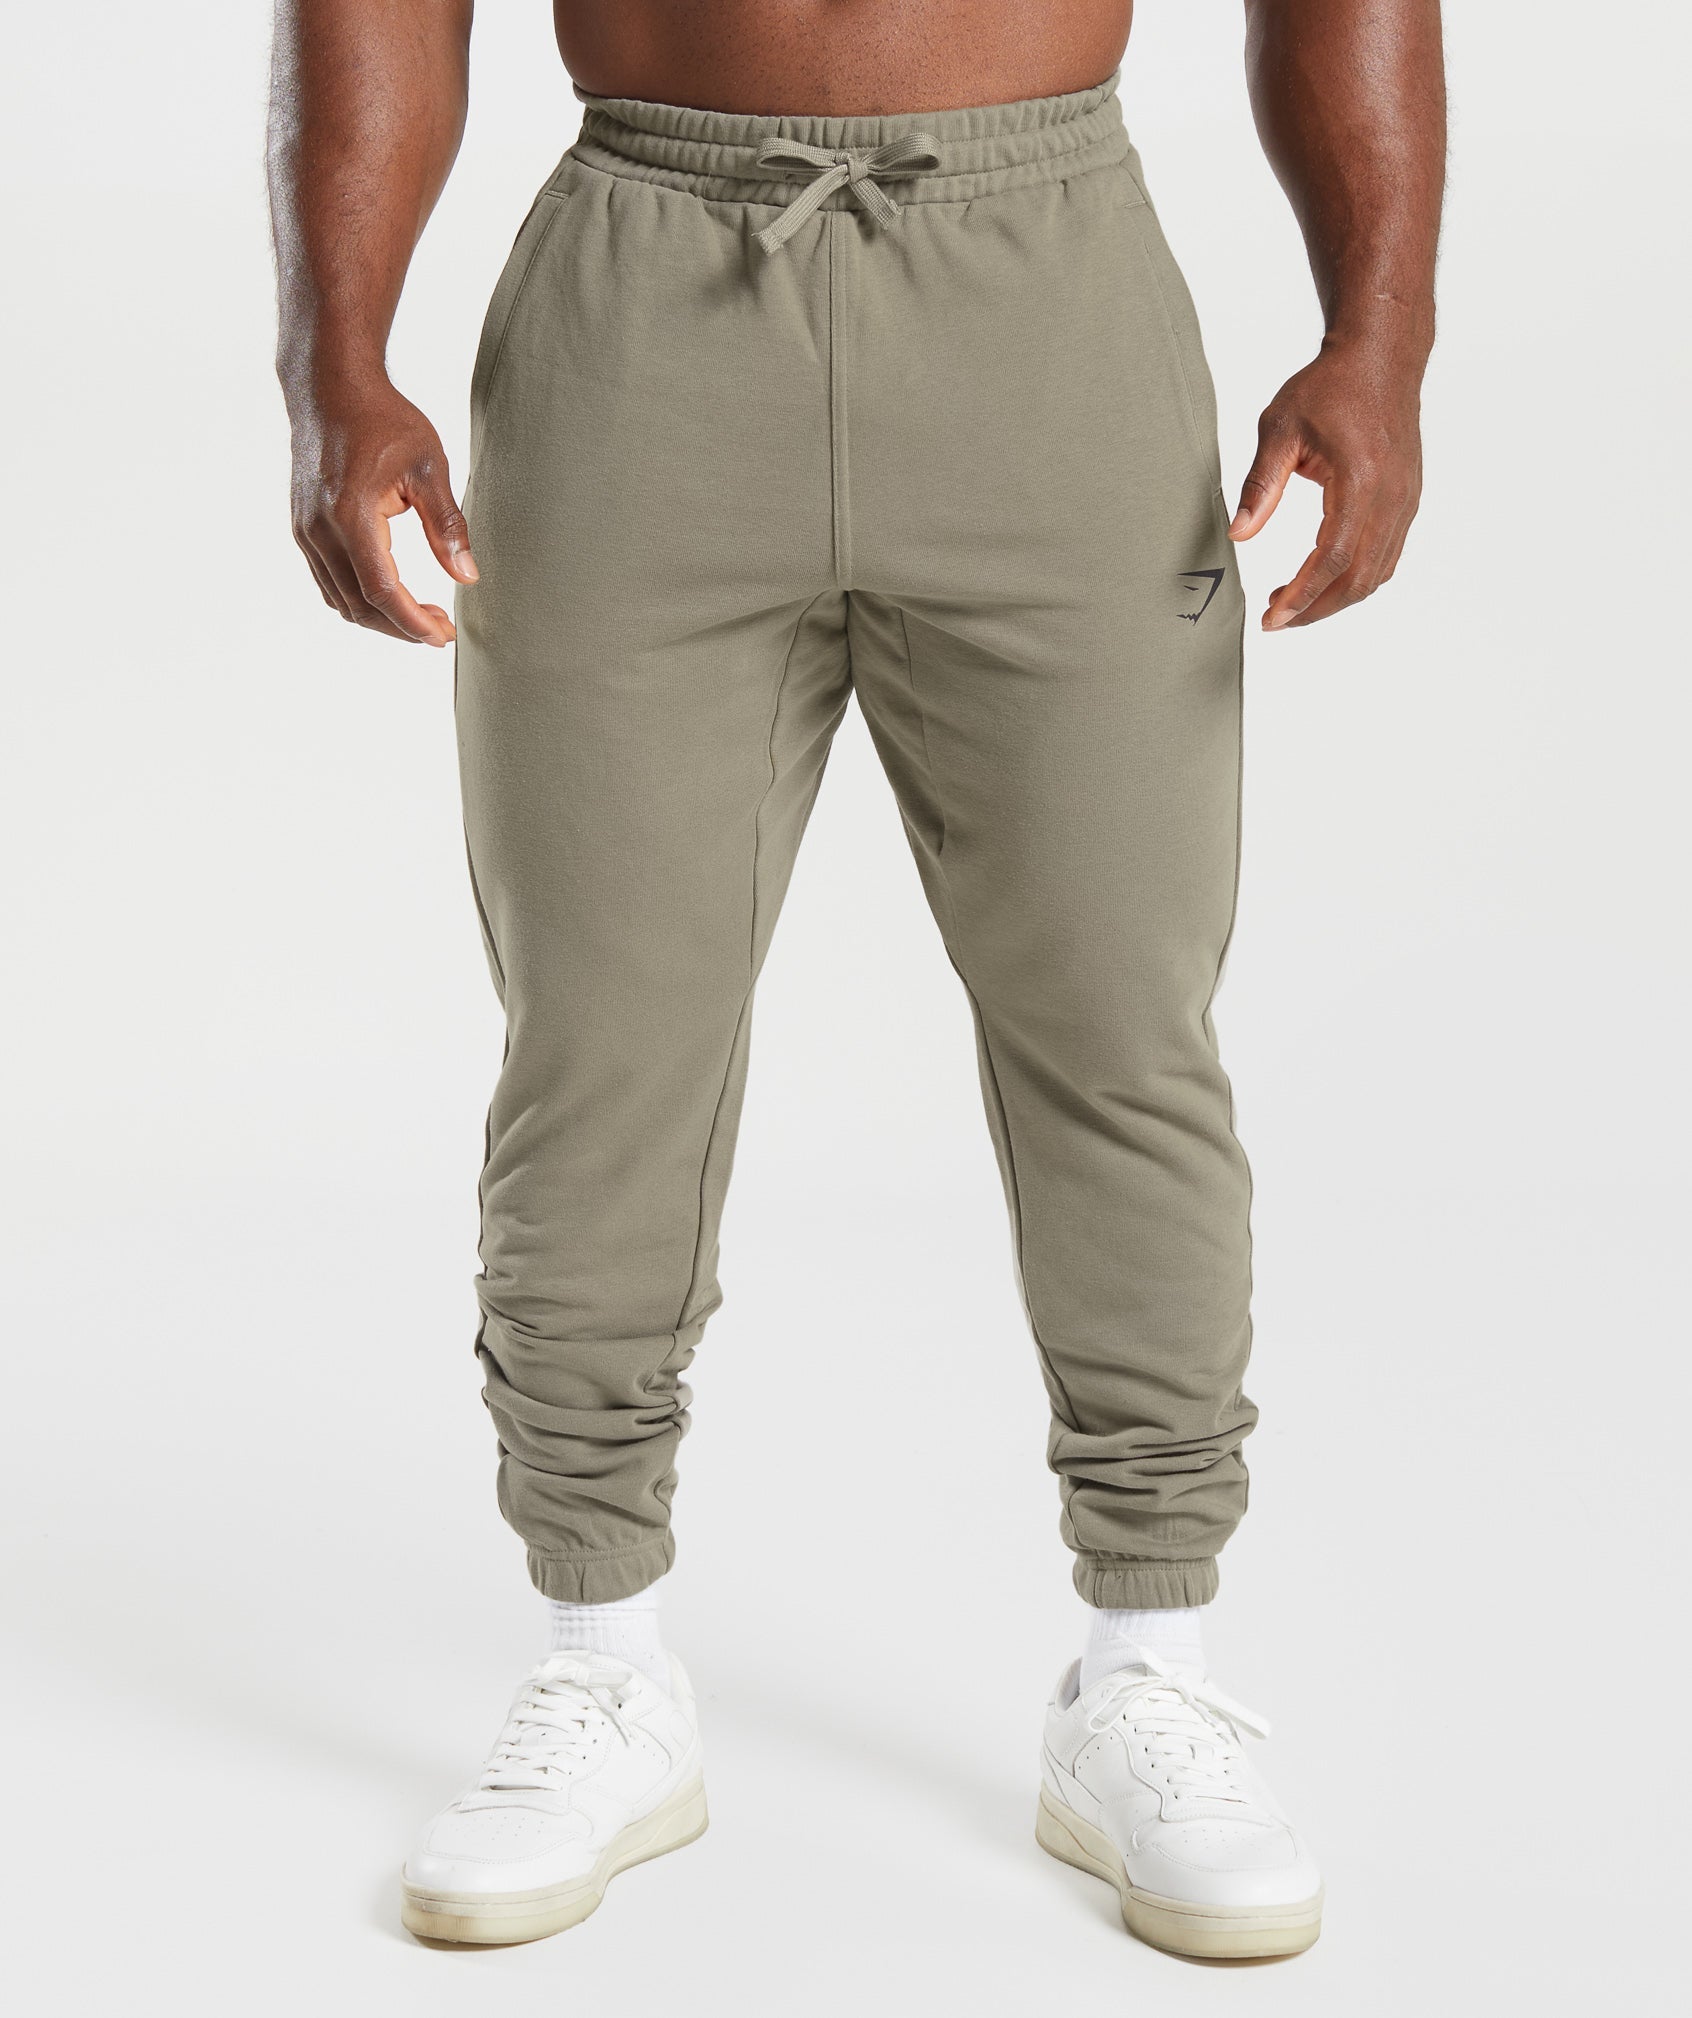 Men's Sweatpants, Workout Pants